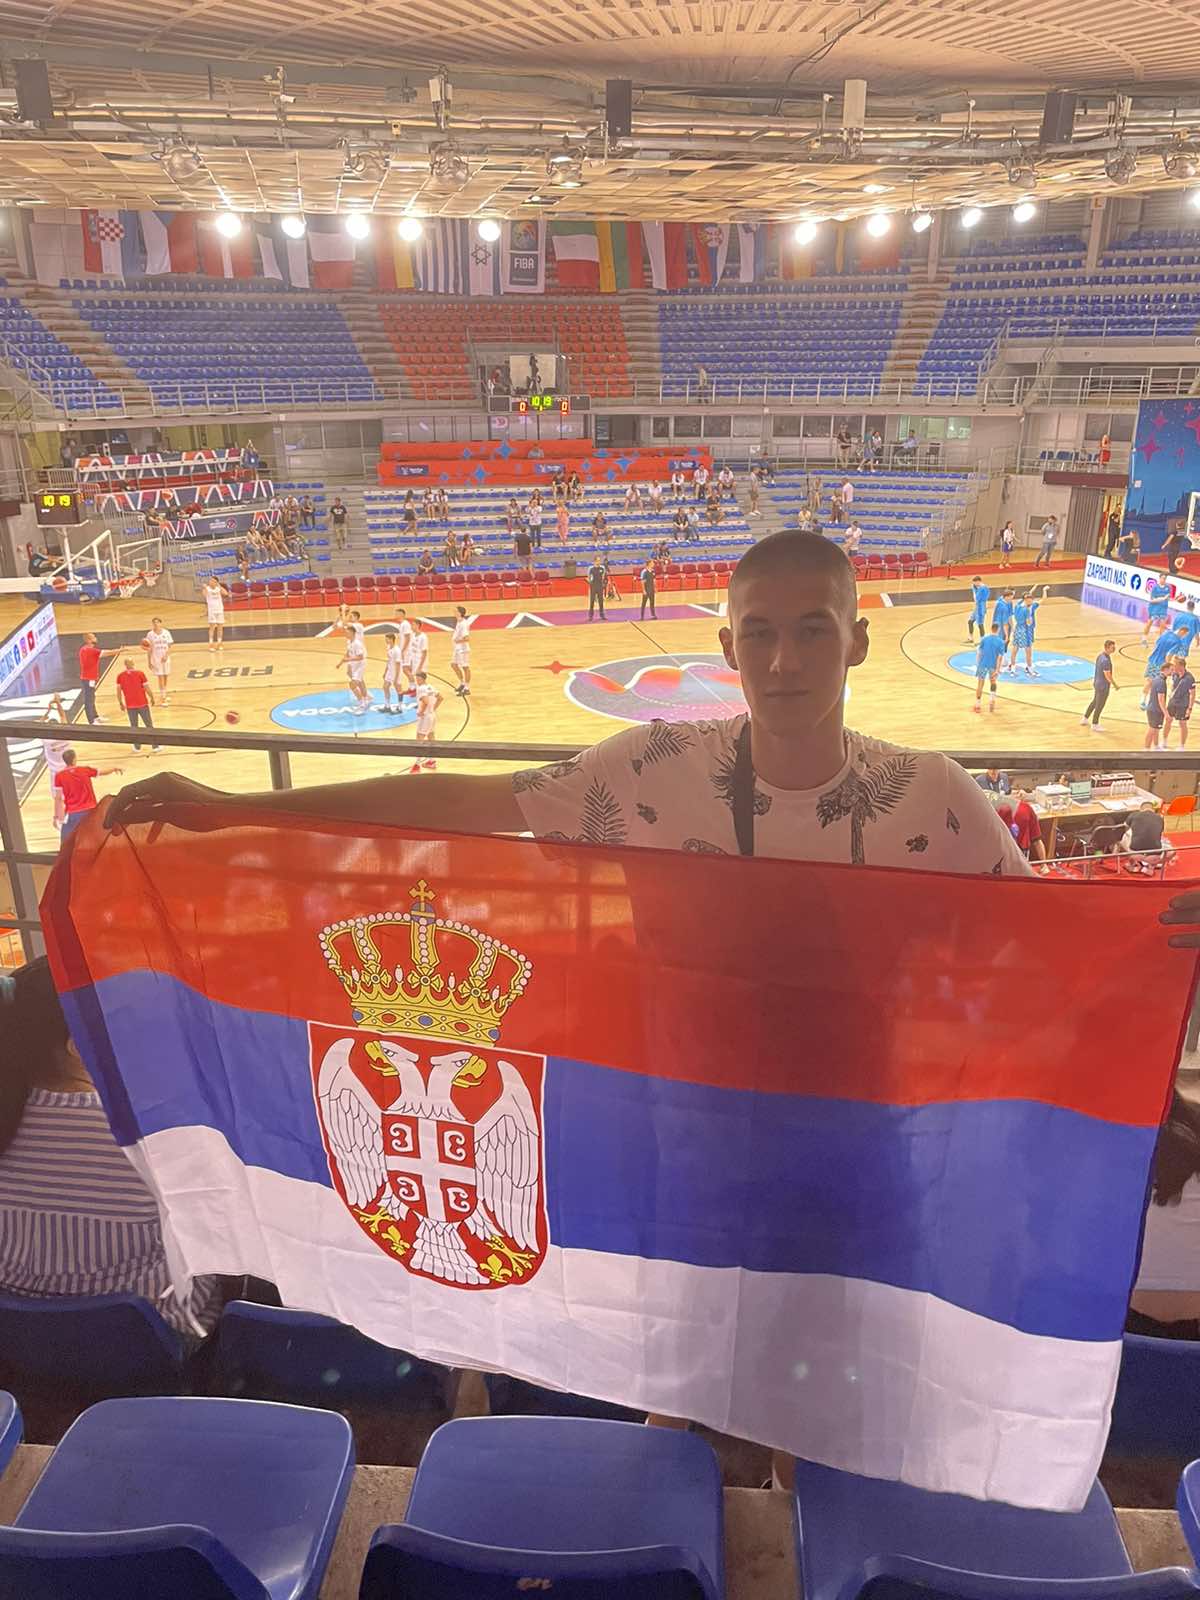 Strahinja Rosuljaš tifa per i giocatori di basket ai Campionati Europei di Niš